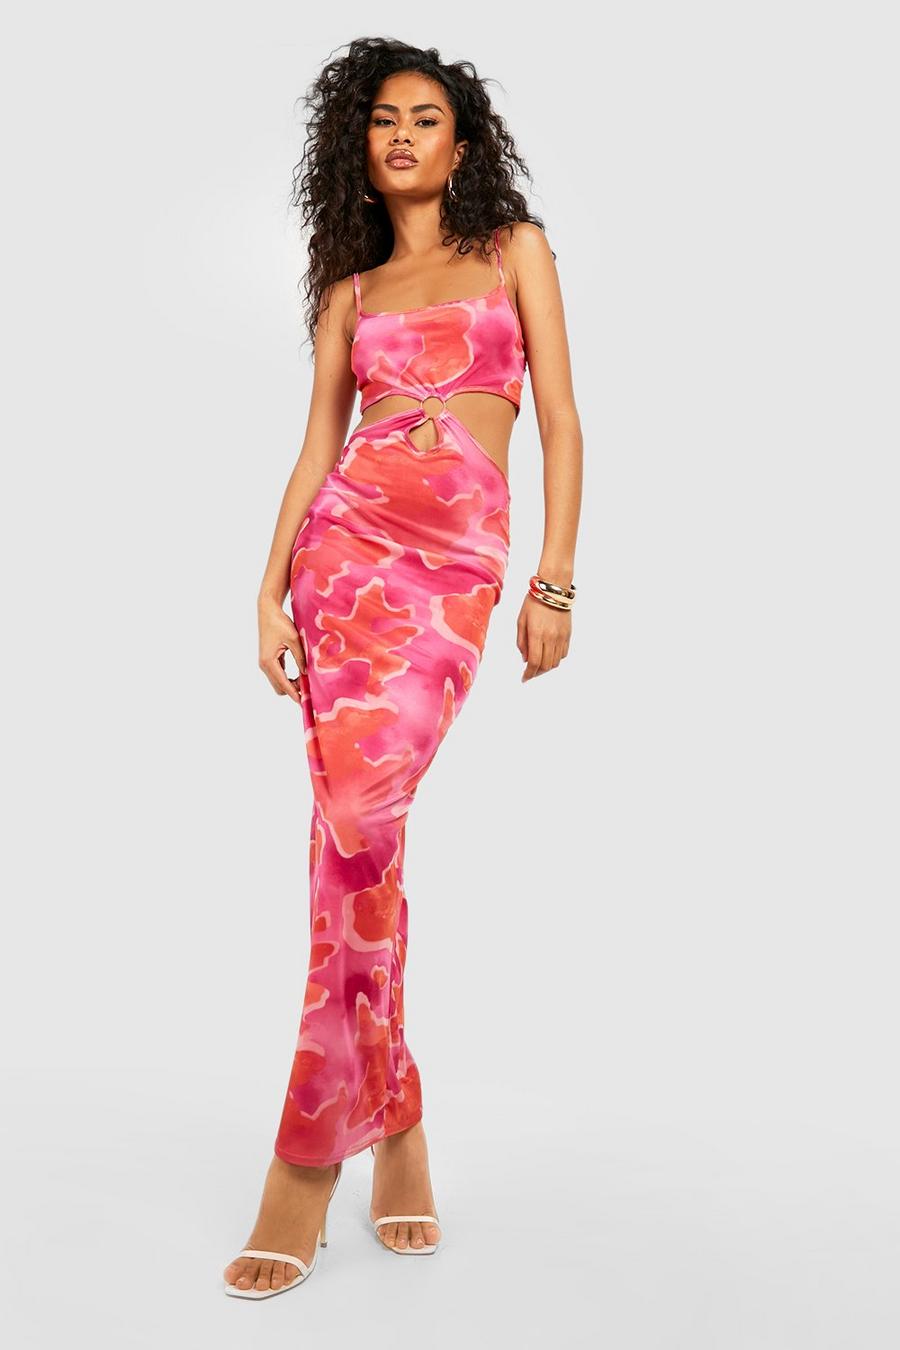 Hot pink rose O Ring Cut Out Abstract Maxi Dress 